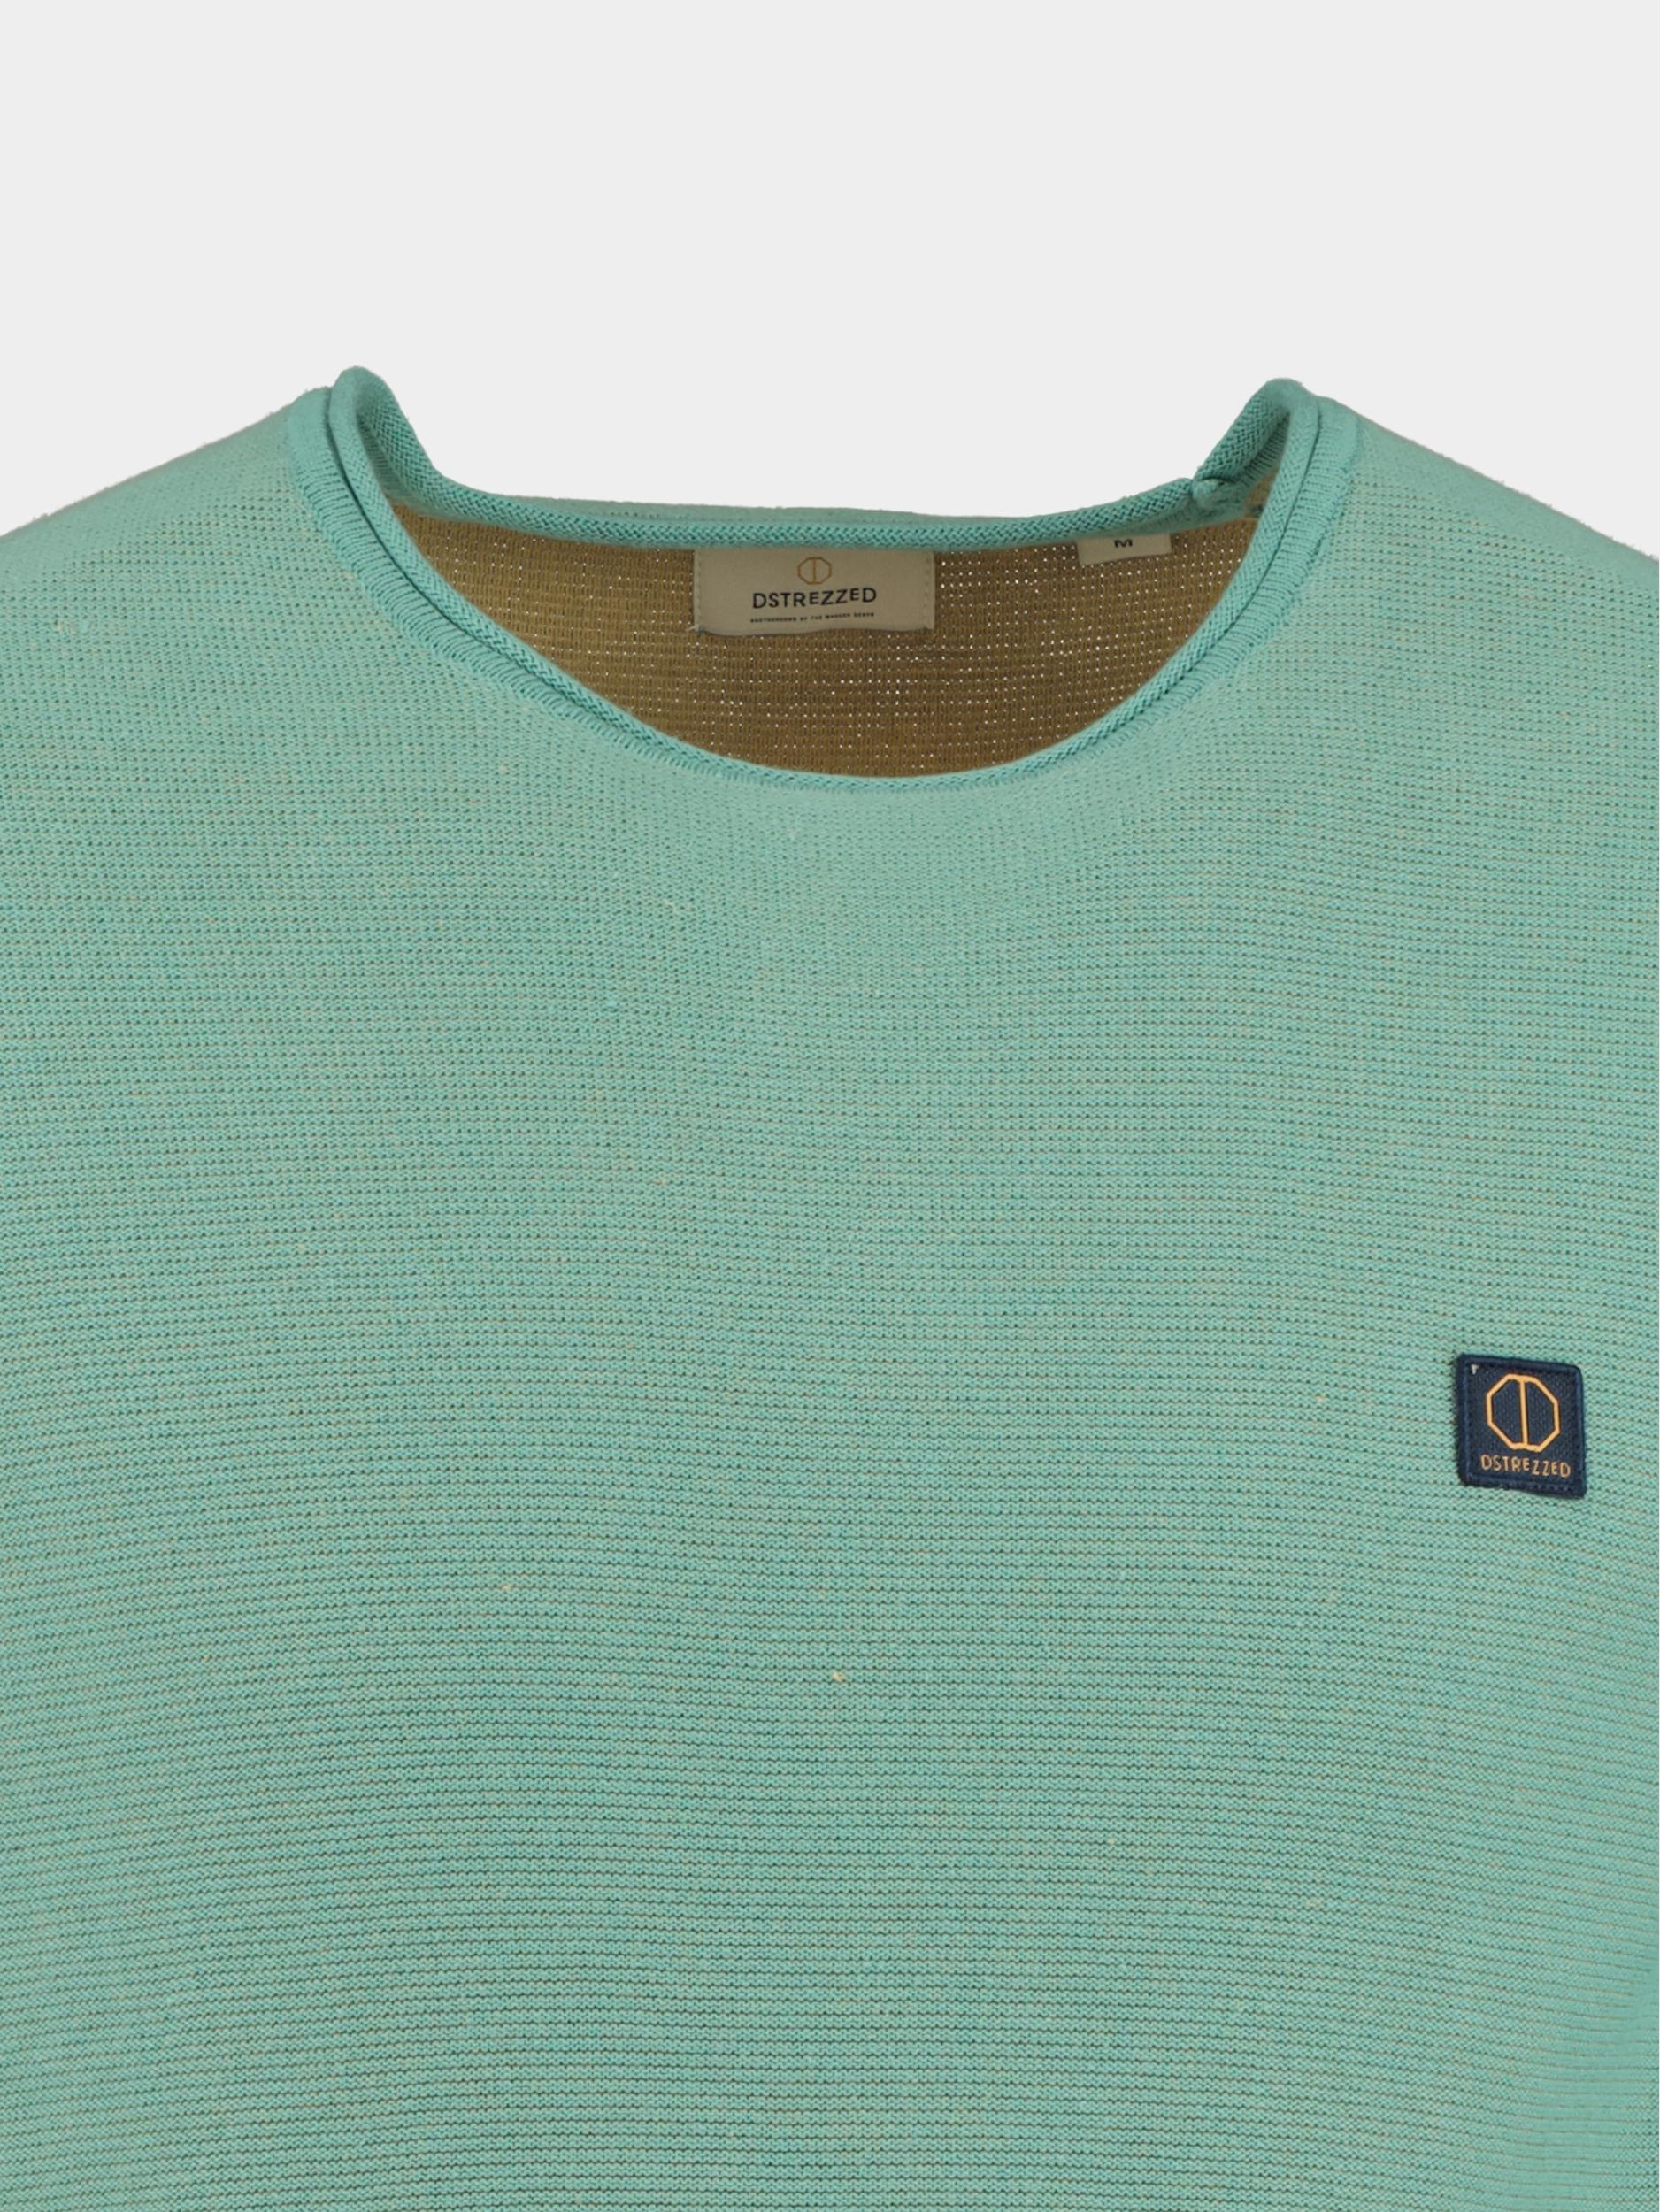 Dstrezzed Sweater Groen Crew Neck Plaited Cotton 405552/556